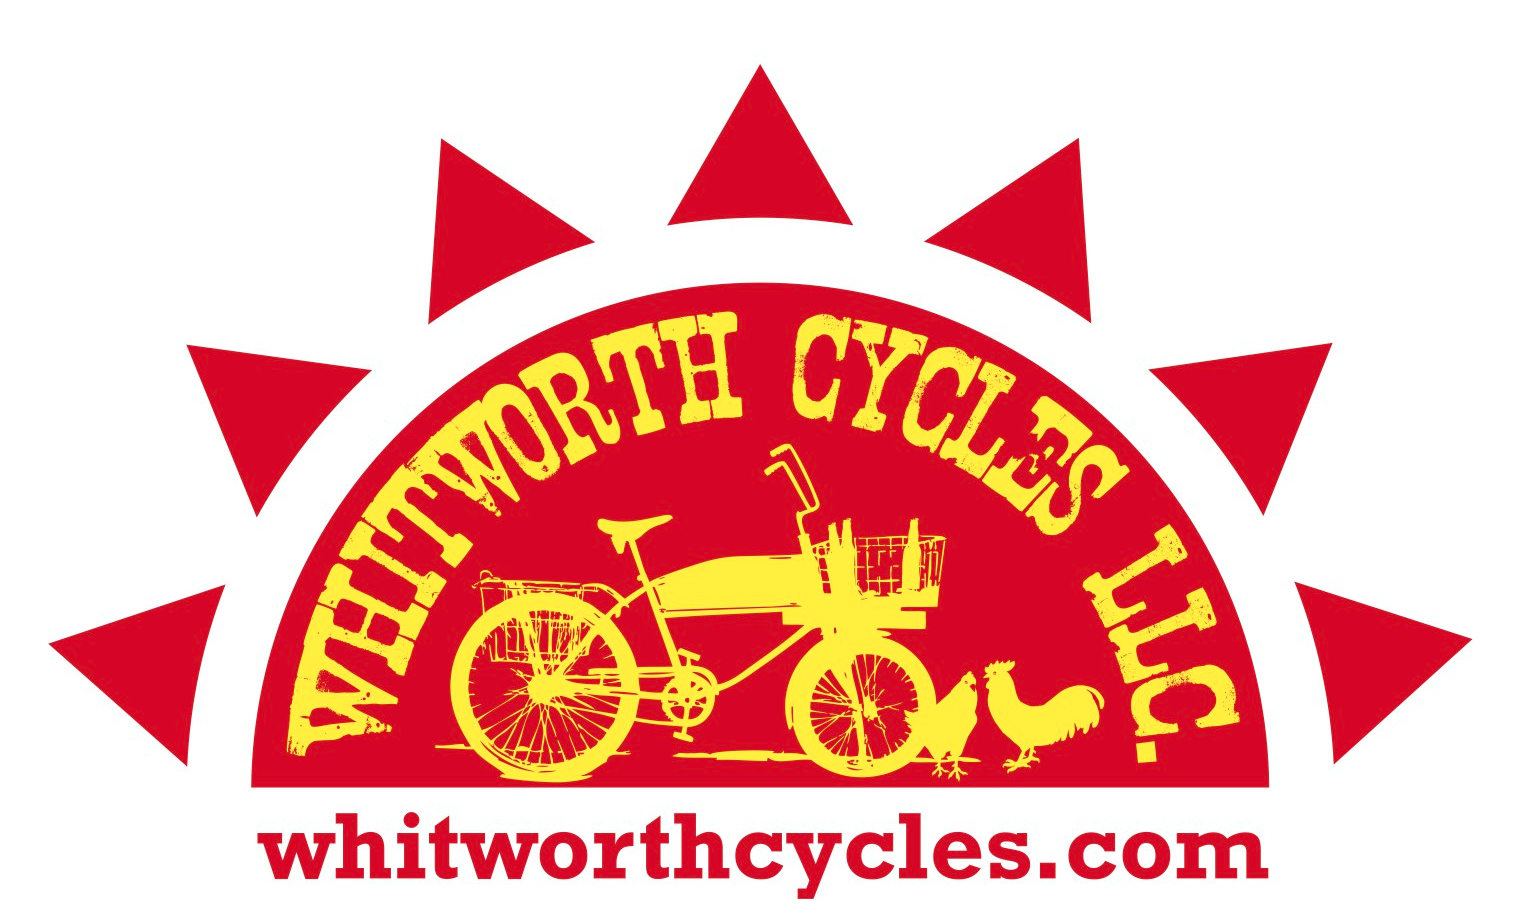 Whitworth Cycles